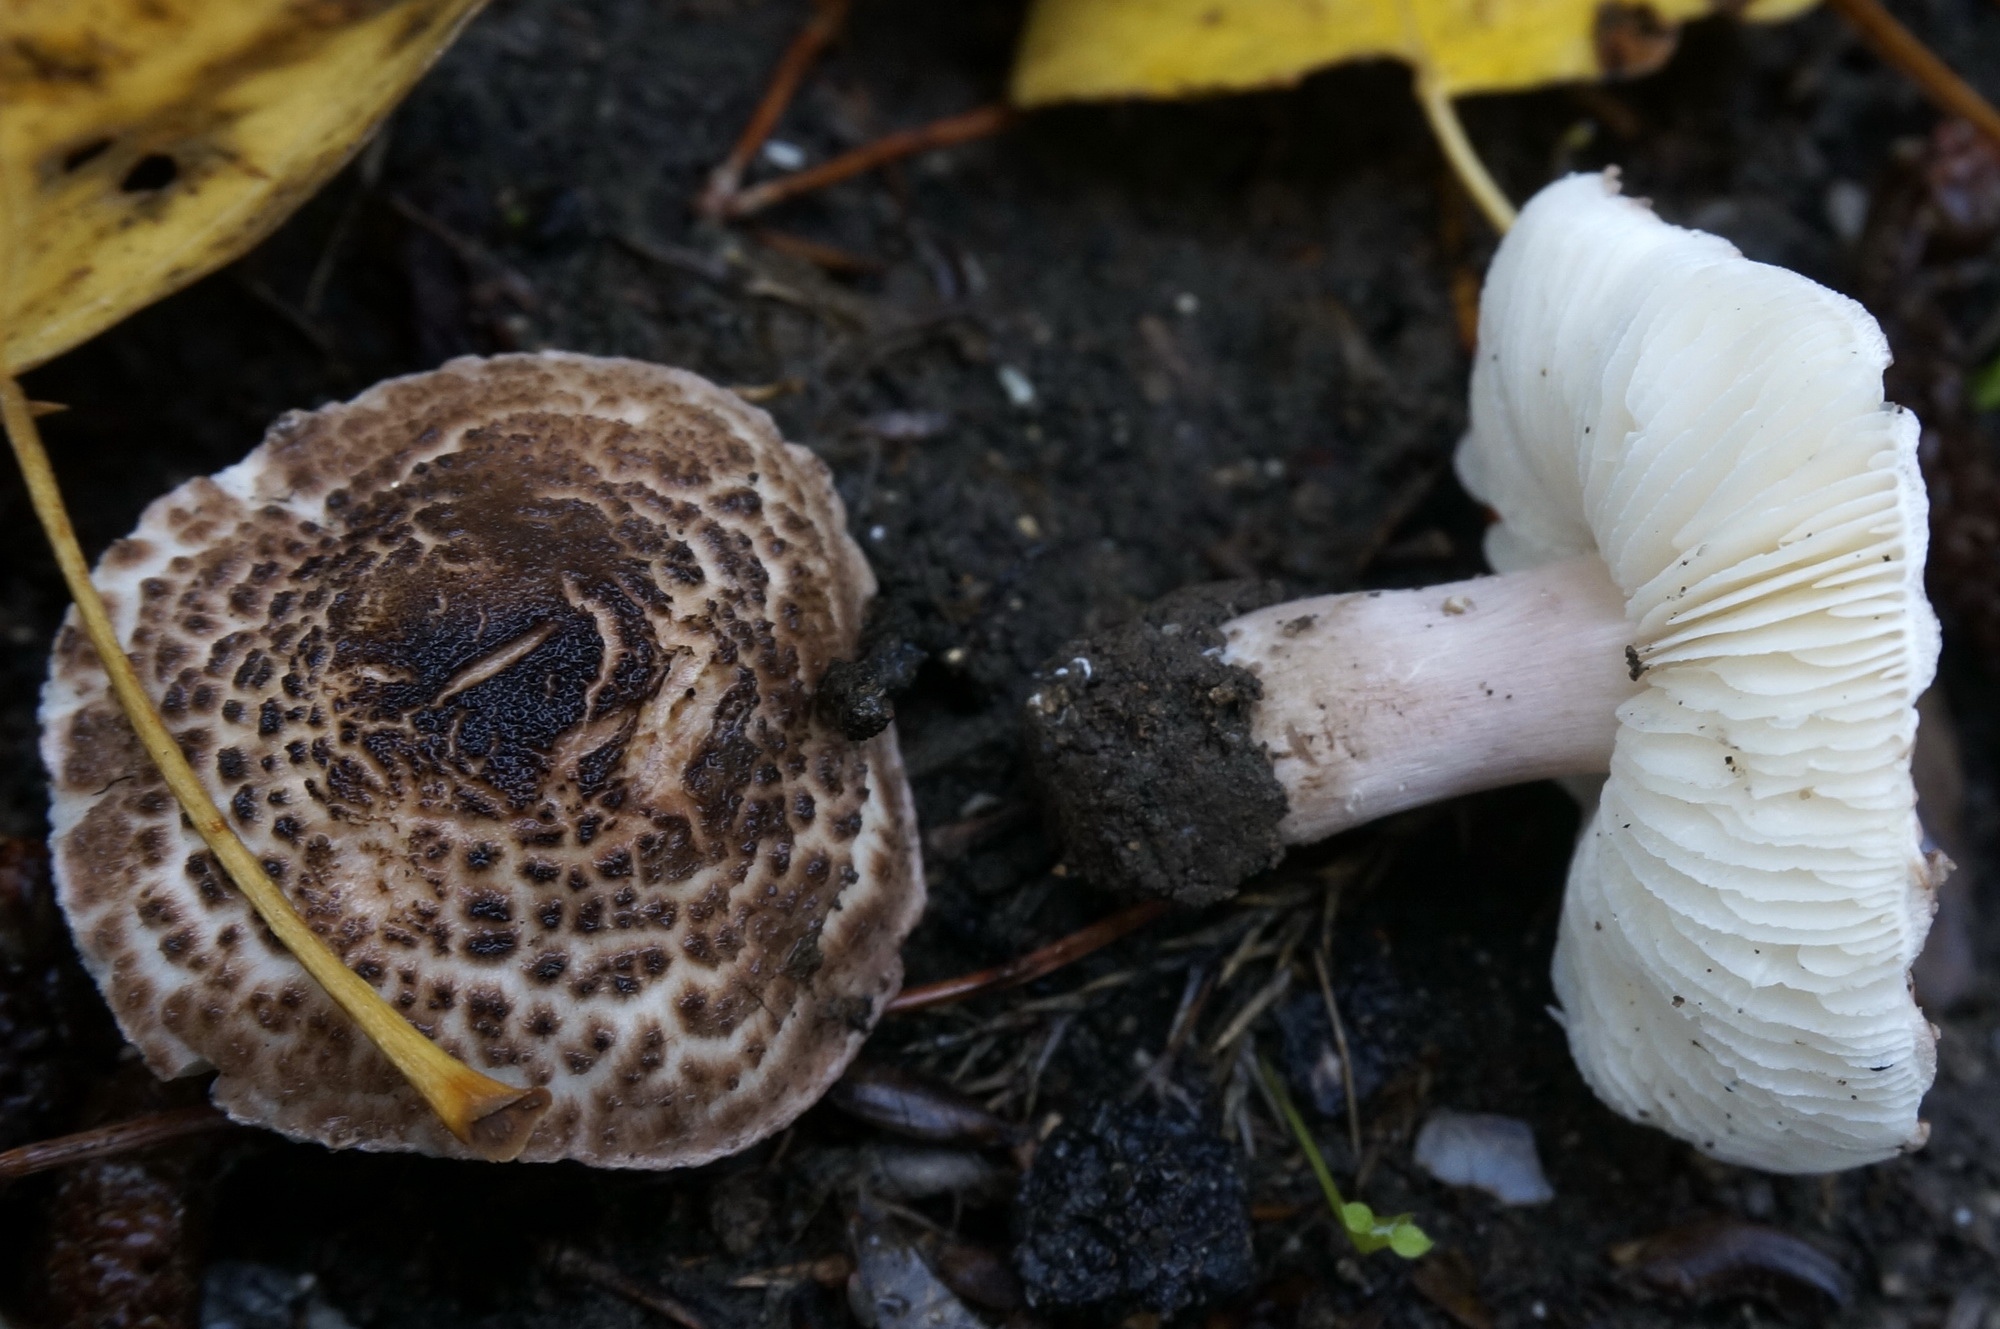 фото съедобных грибов крыма с названиями